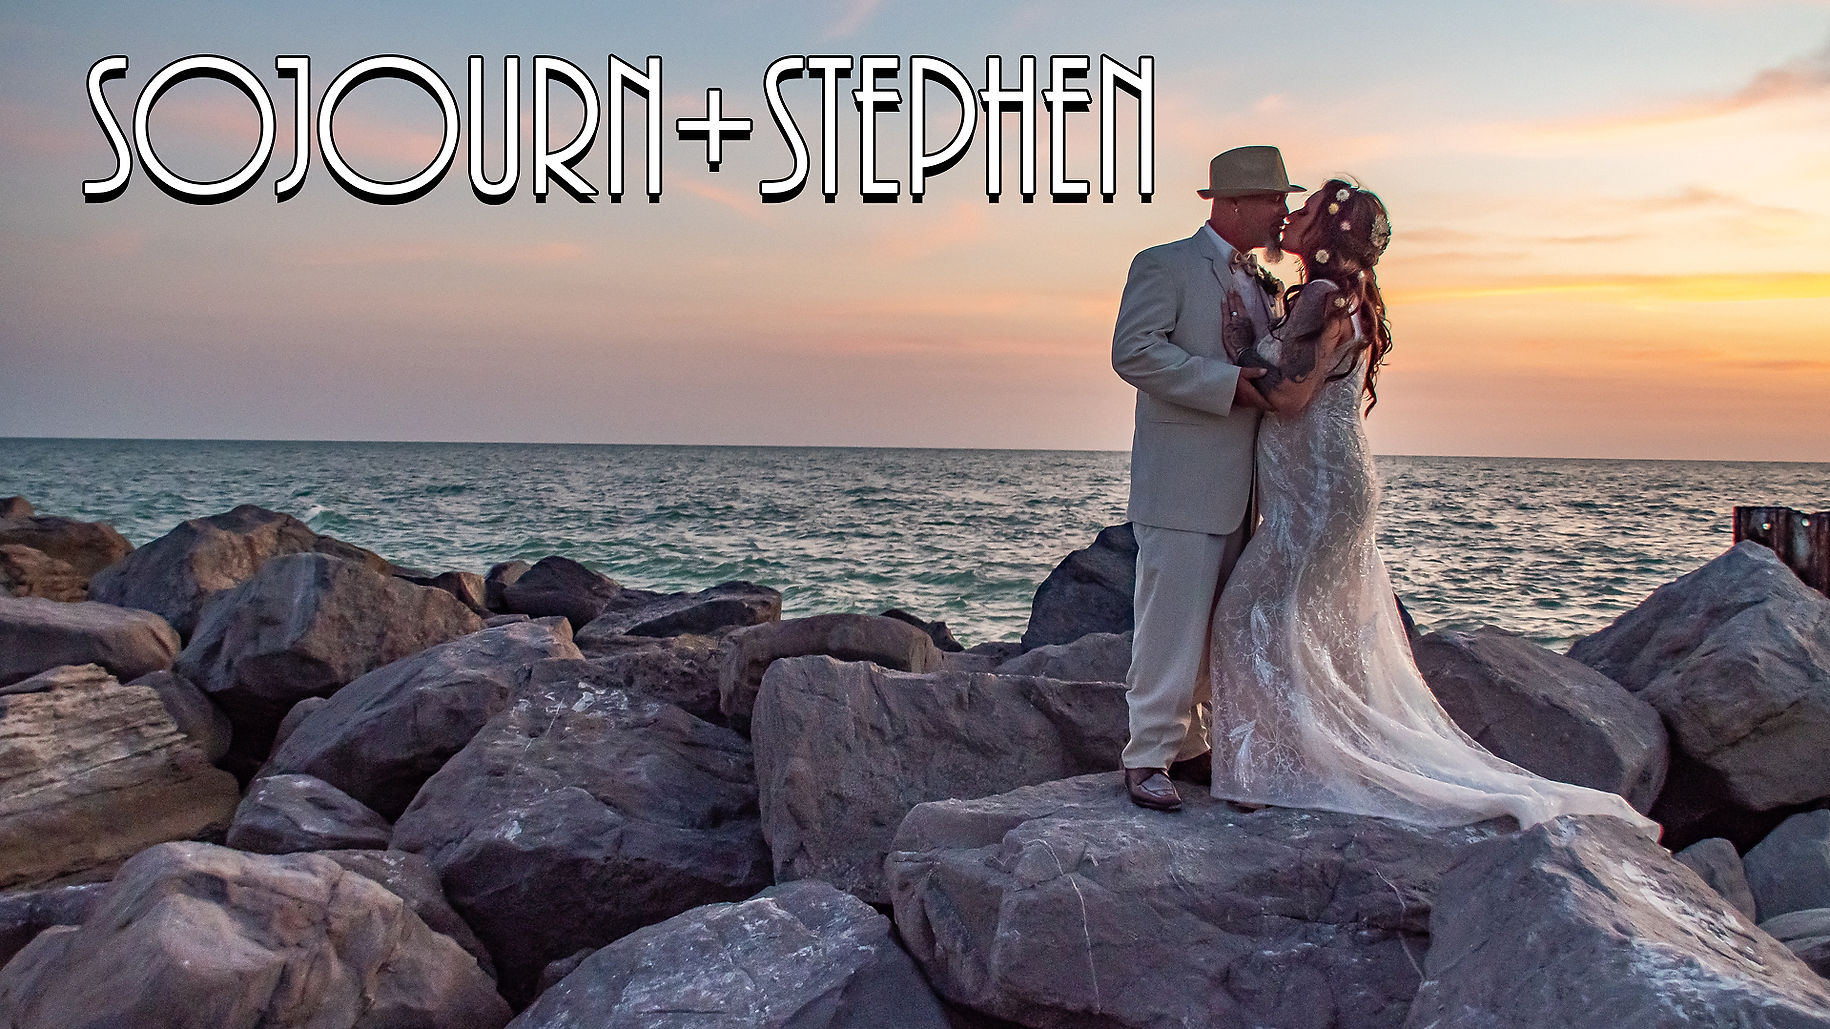 Sojourn & Stephen Ceremony Wedding Film_9mbps